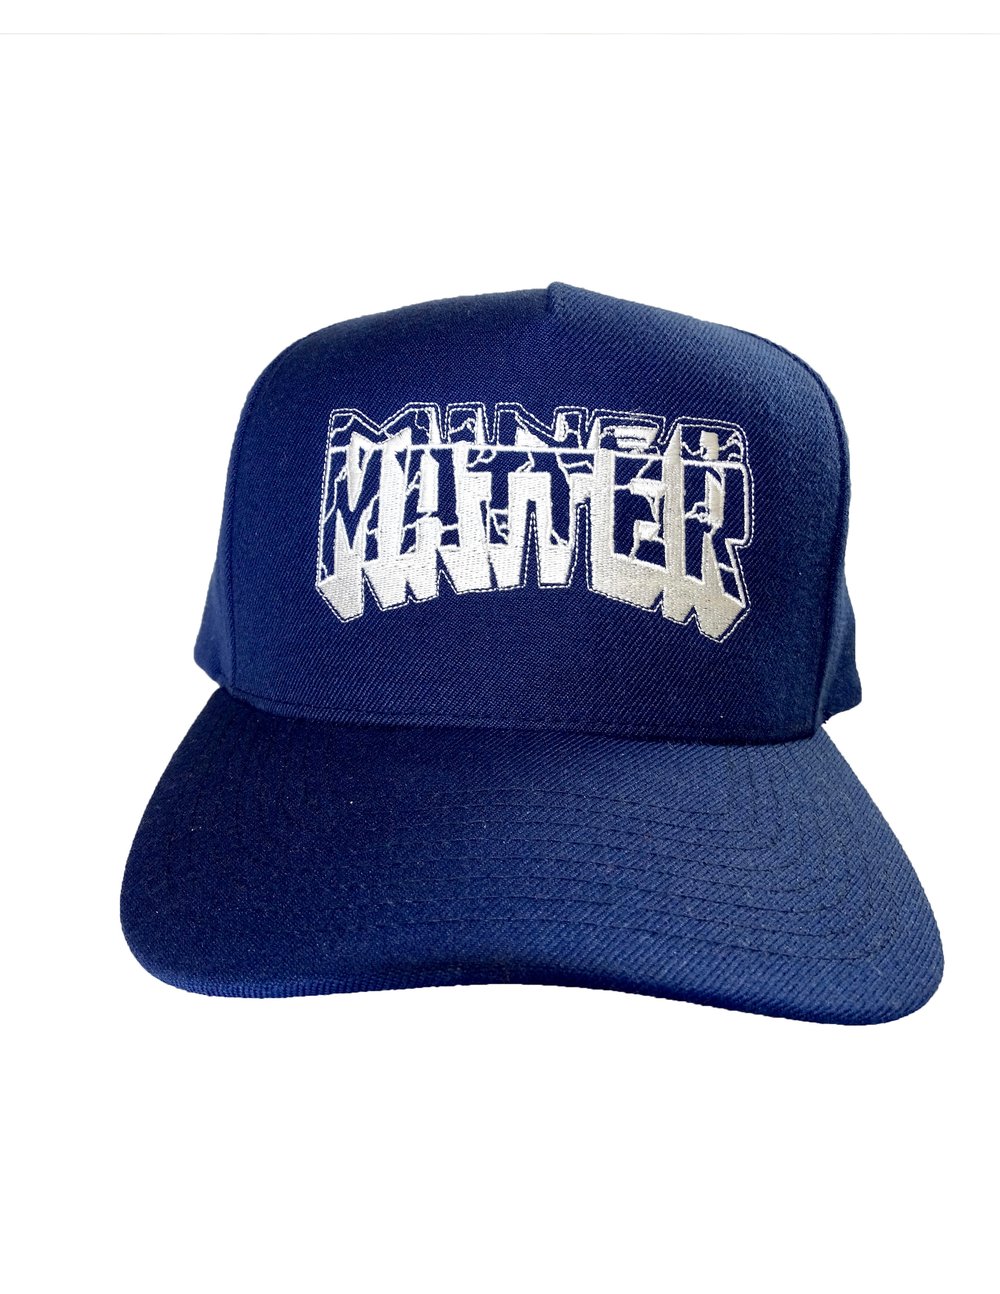 Mined Matter Stone Henge Embroidered Snapback Hat - Navy